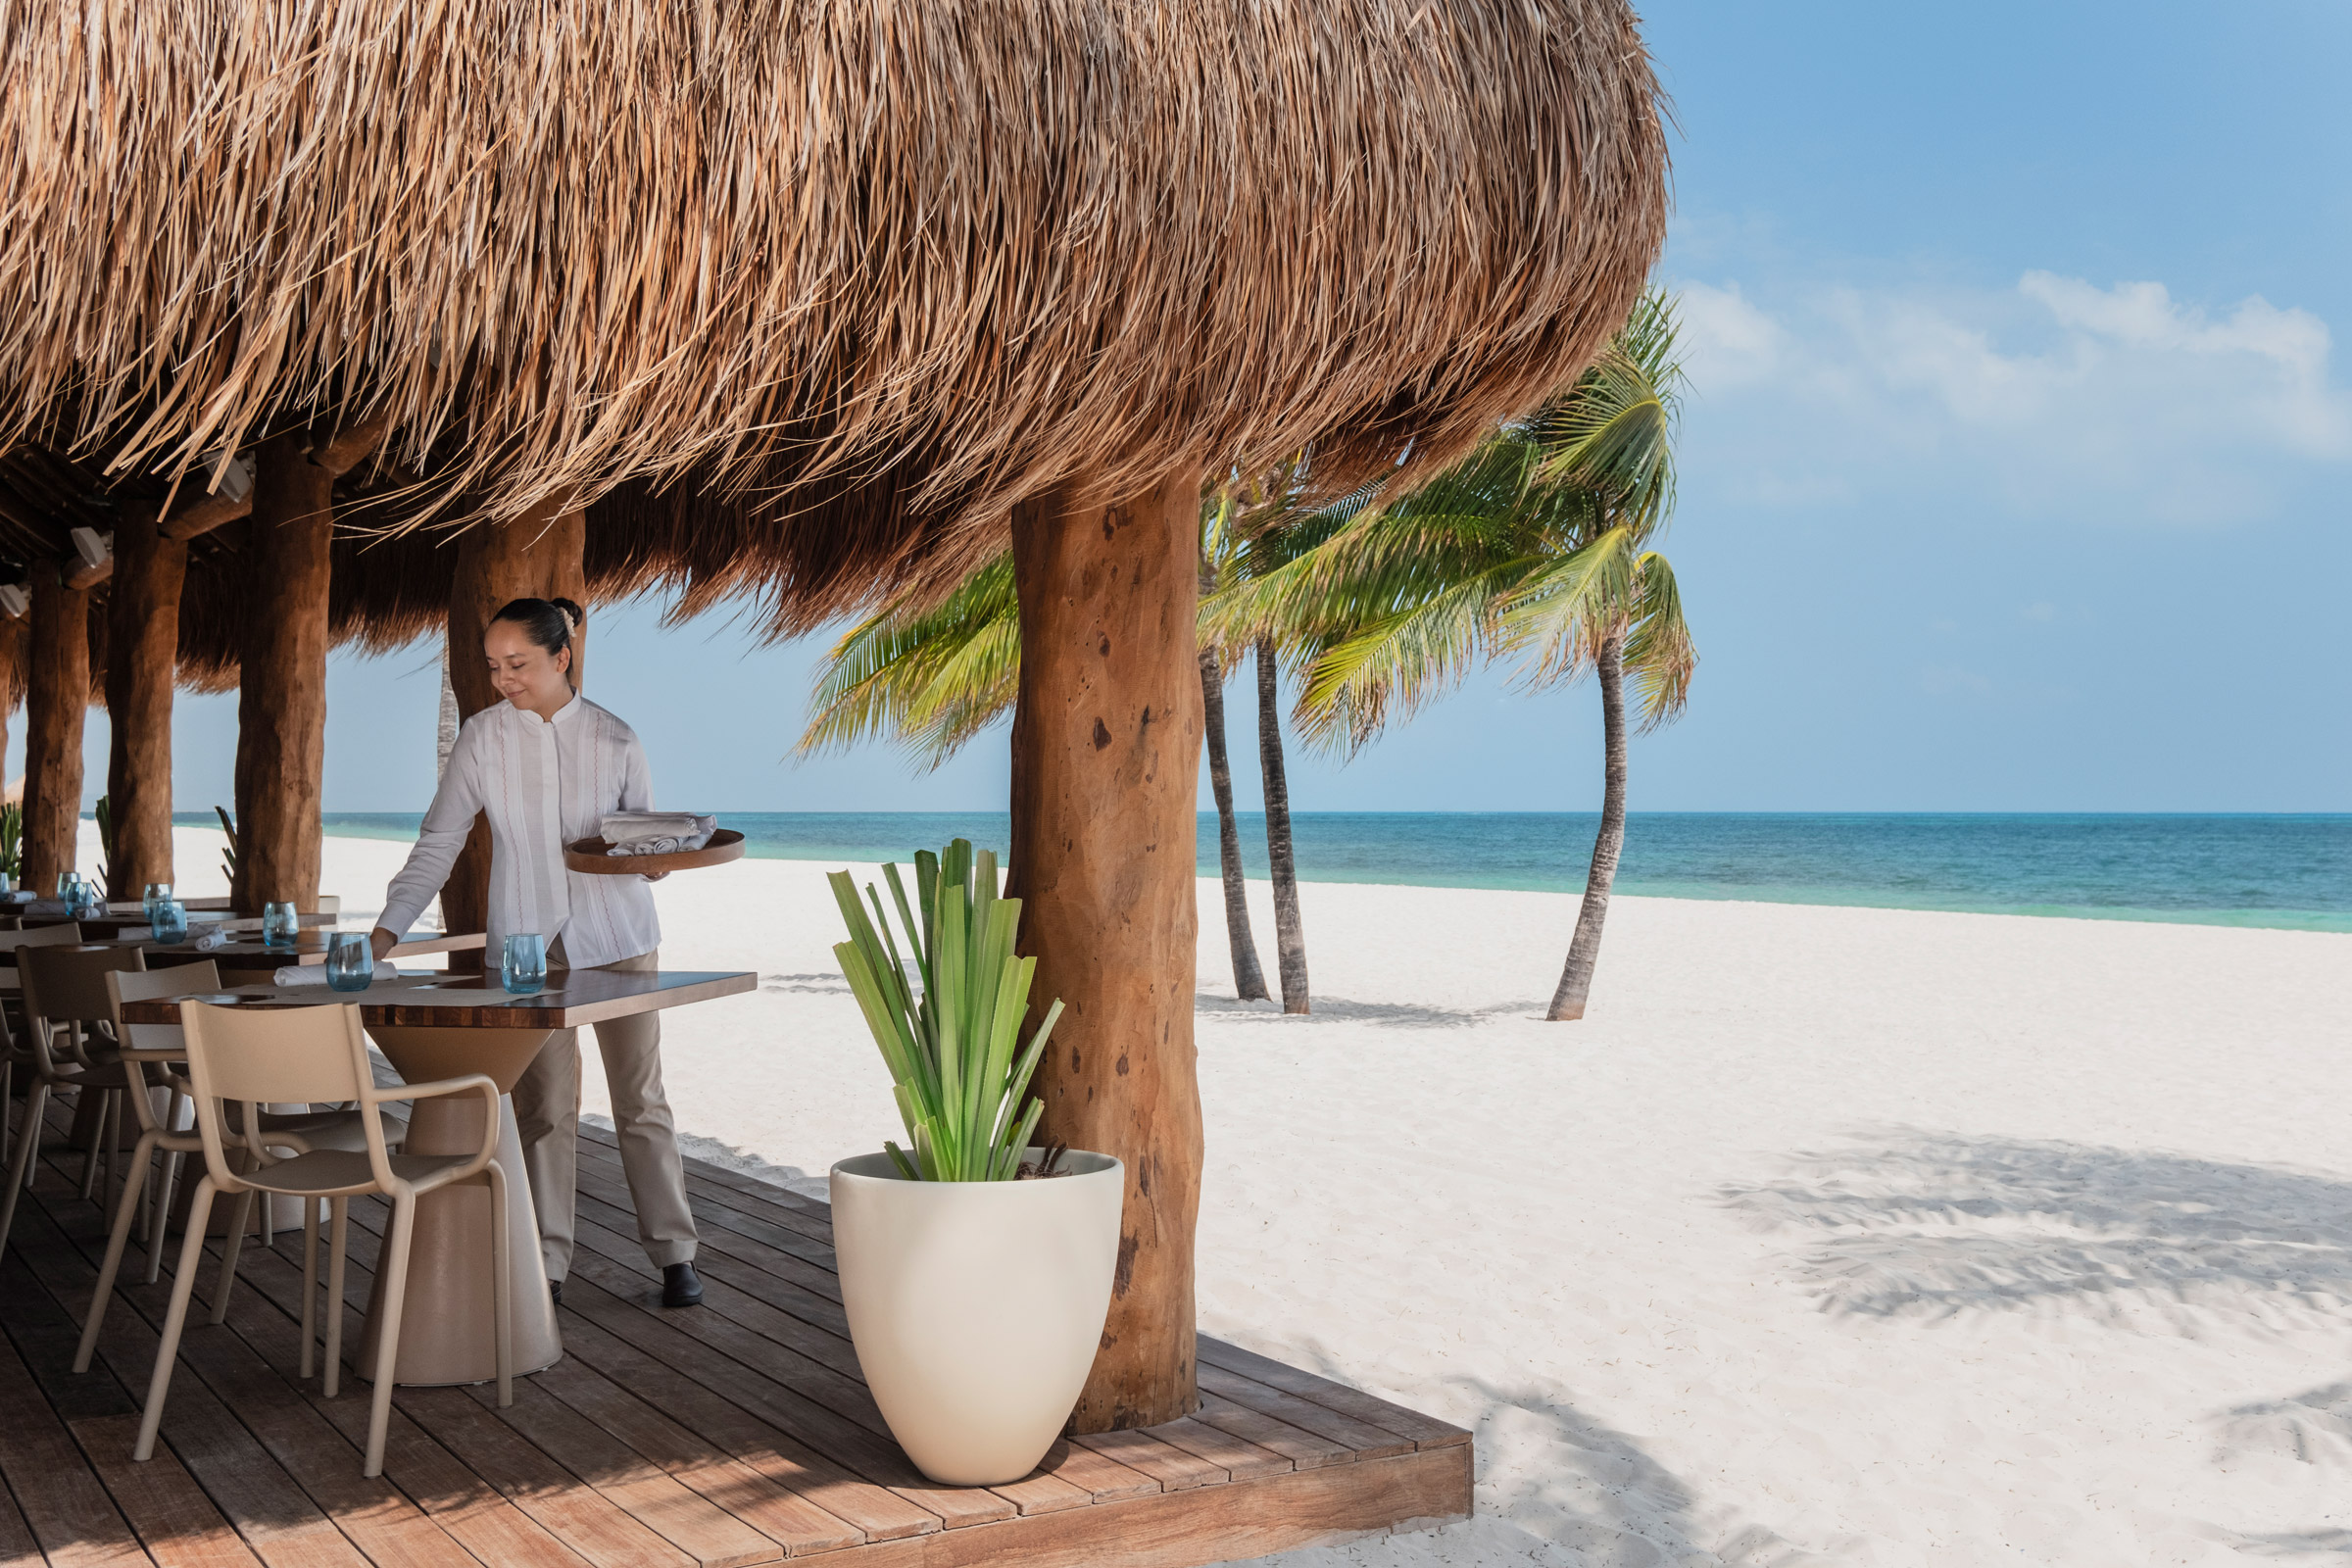 Beachside restaurant in Cancun, Mexico